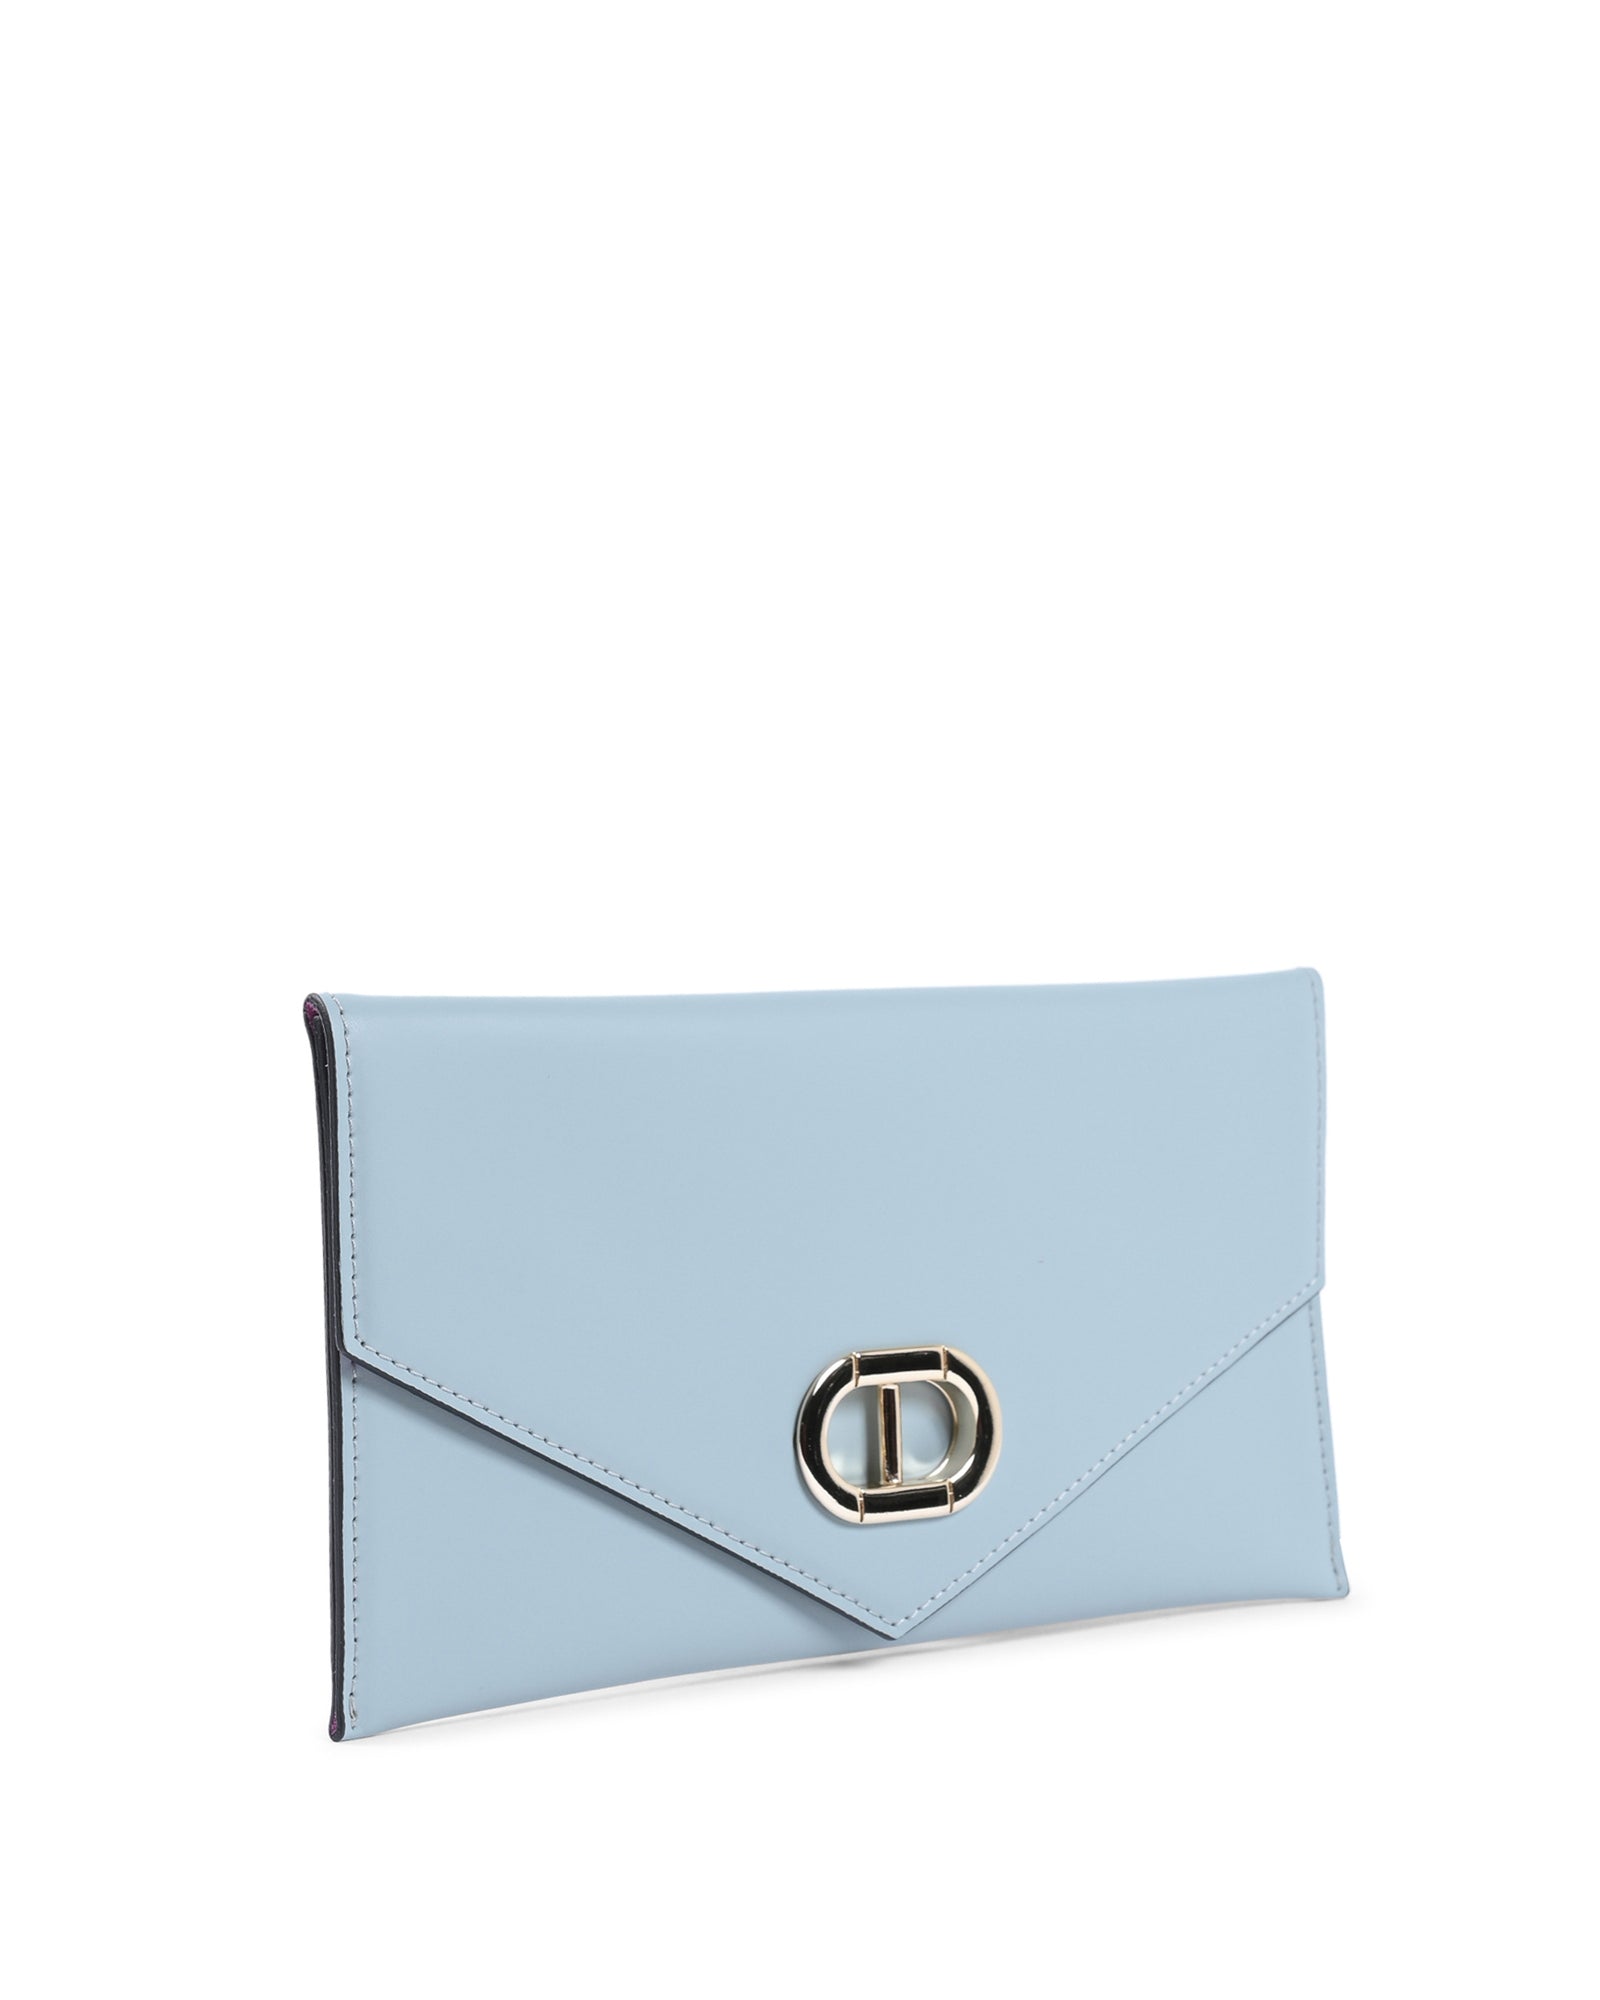 Leather Envelope Clutch - Light Blue